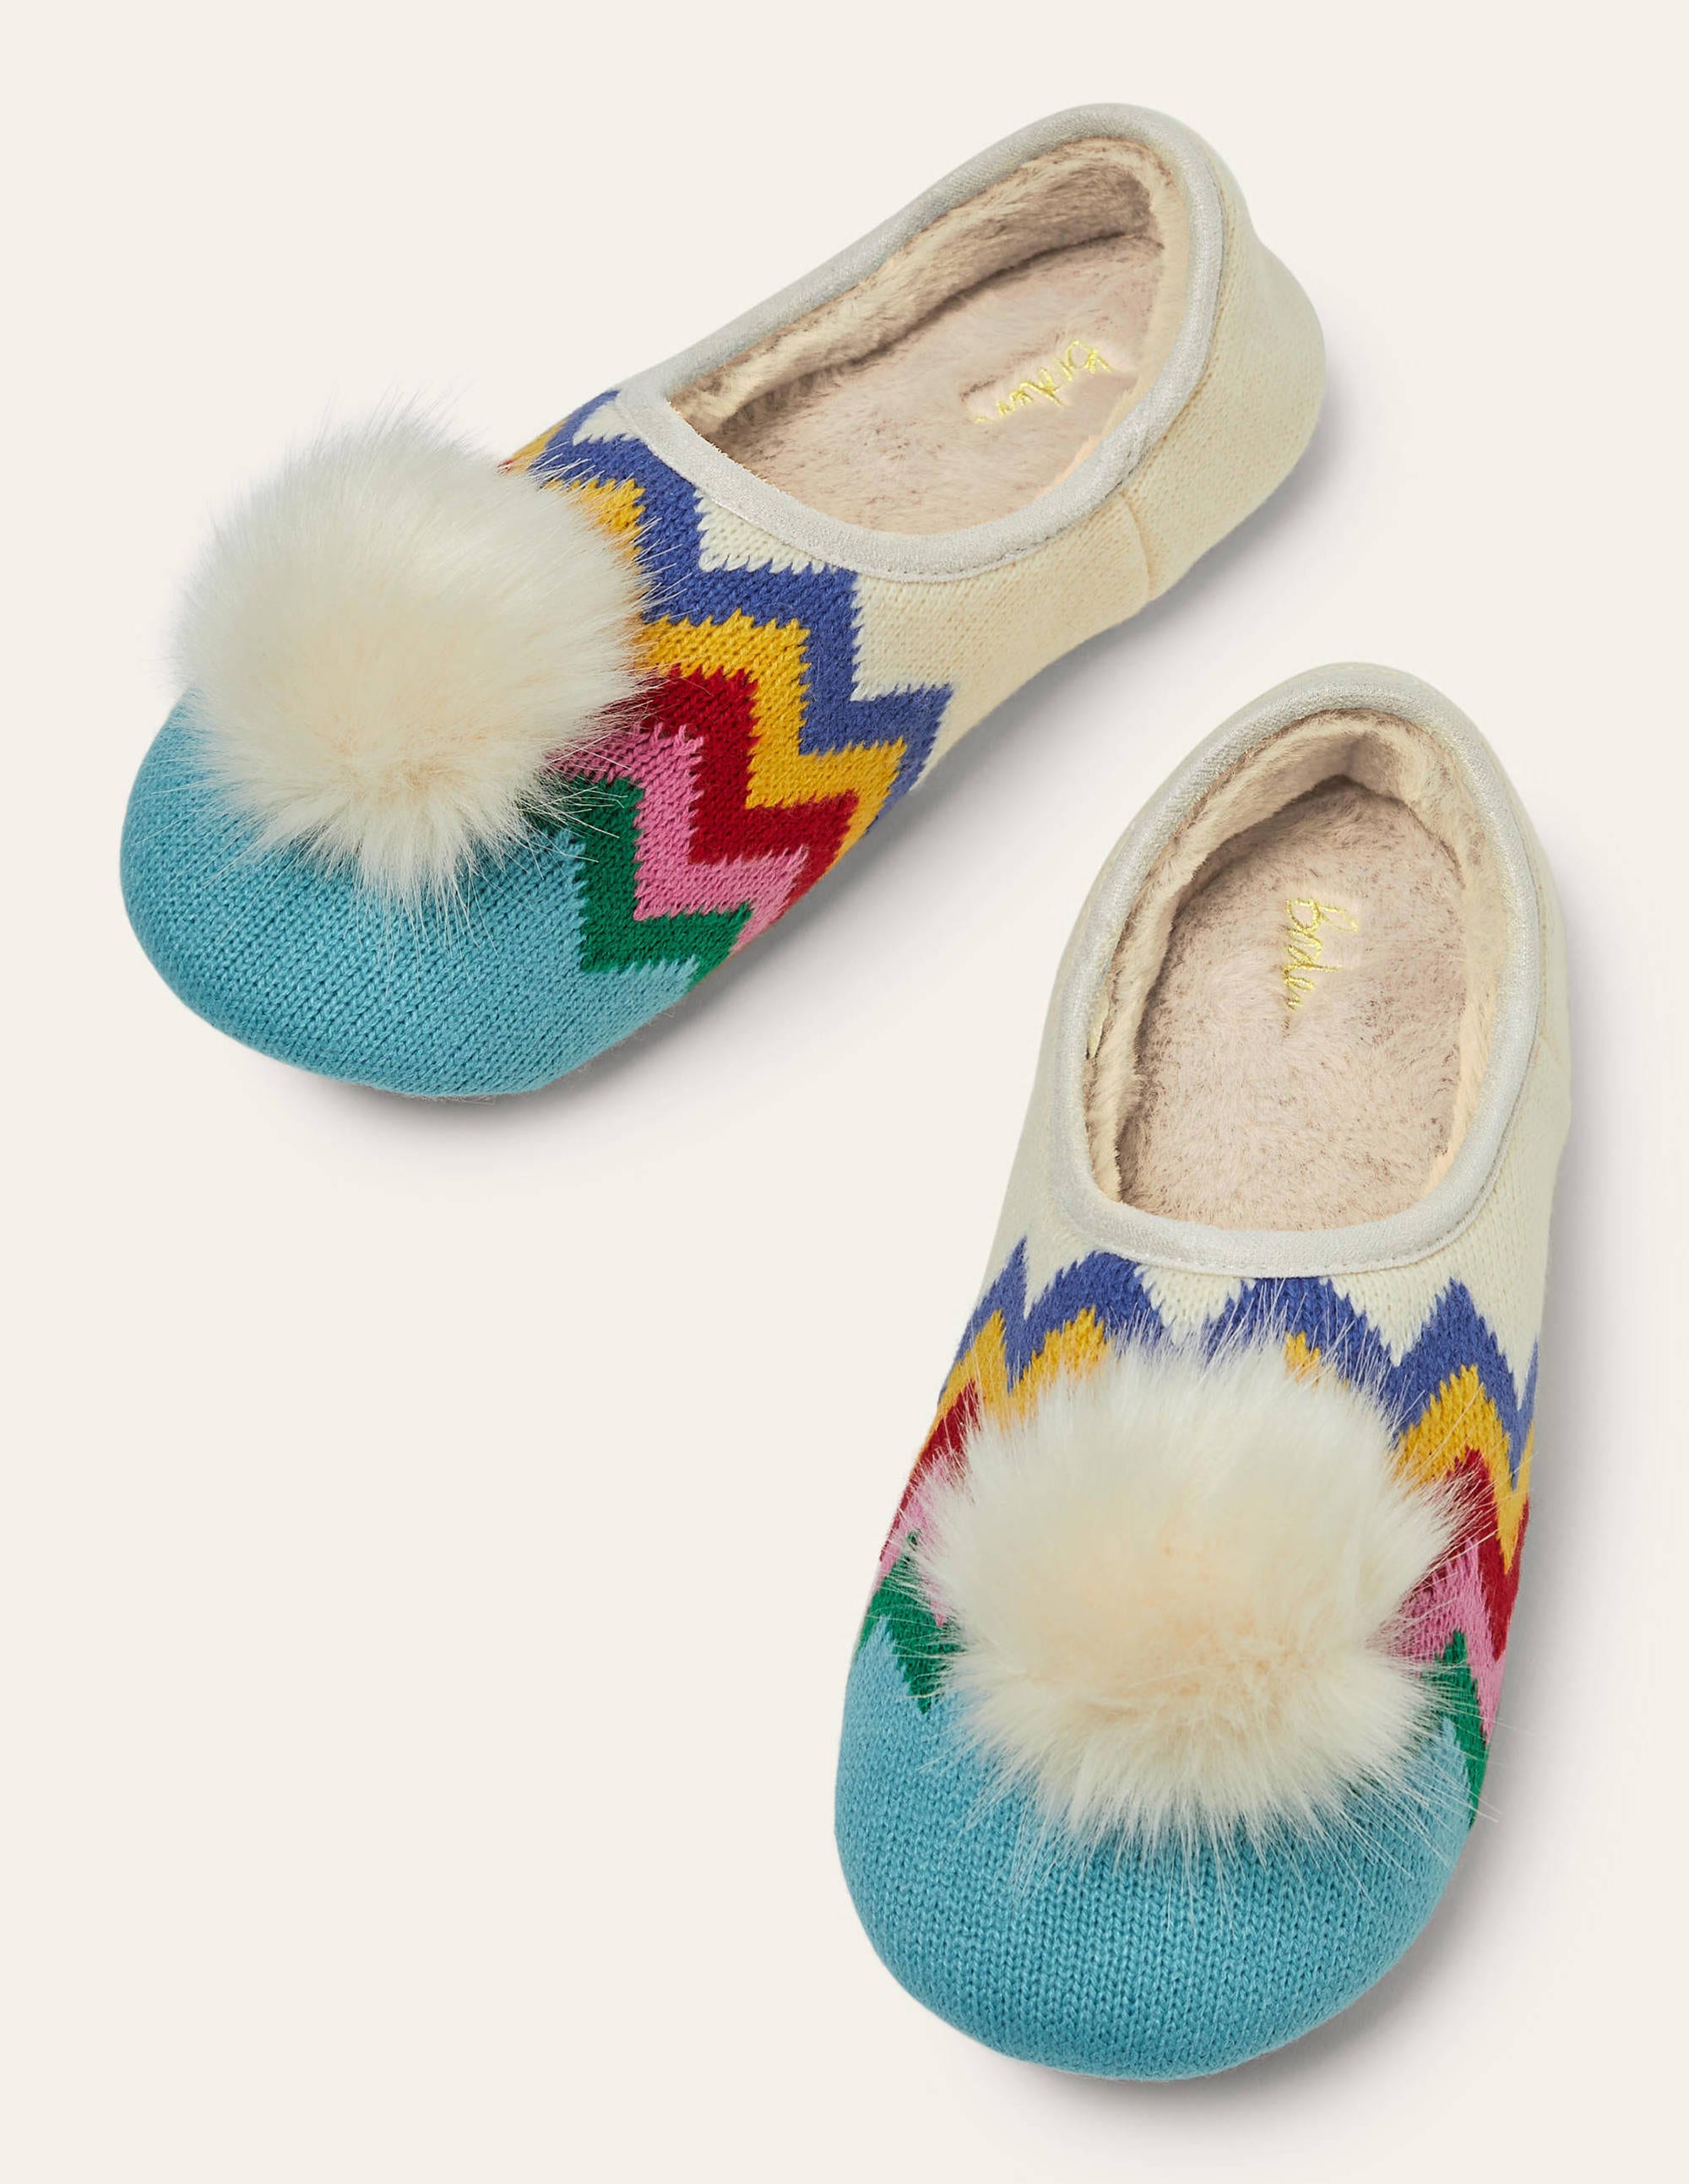 blue mule slippers